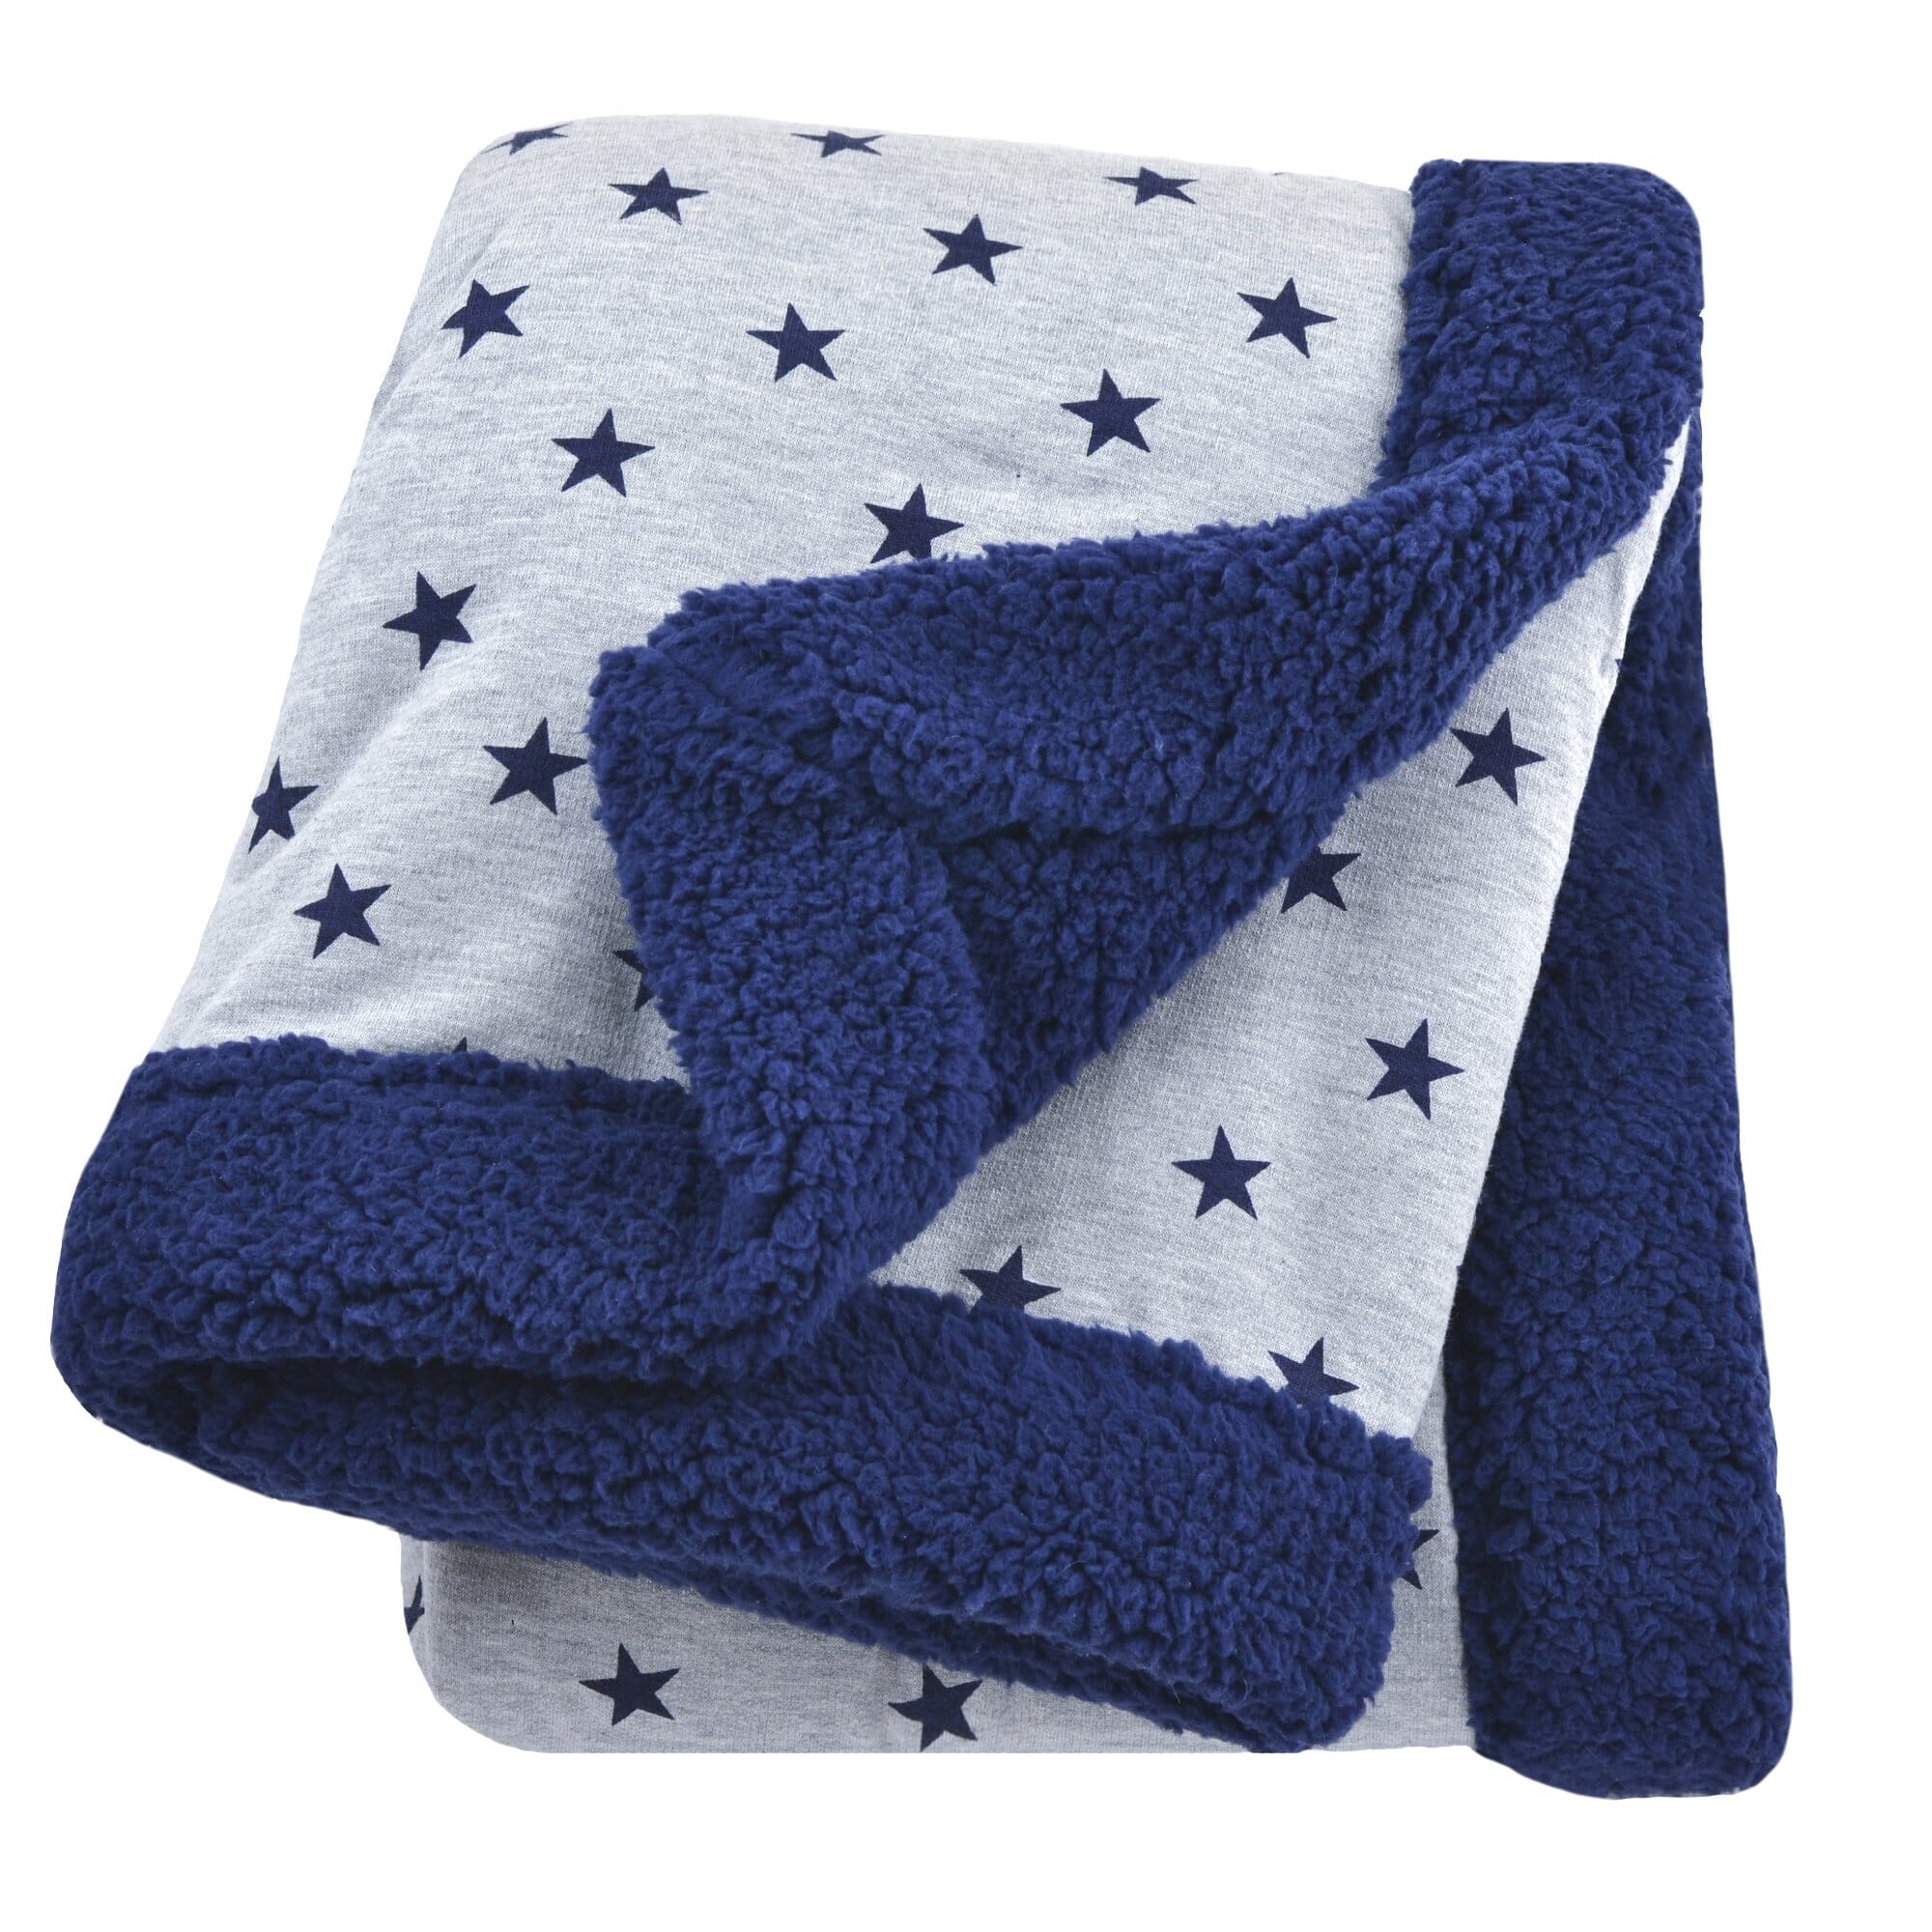 Plush Blanket in Navy and Heather Grey – Gerber Childrenswear